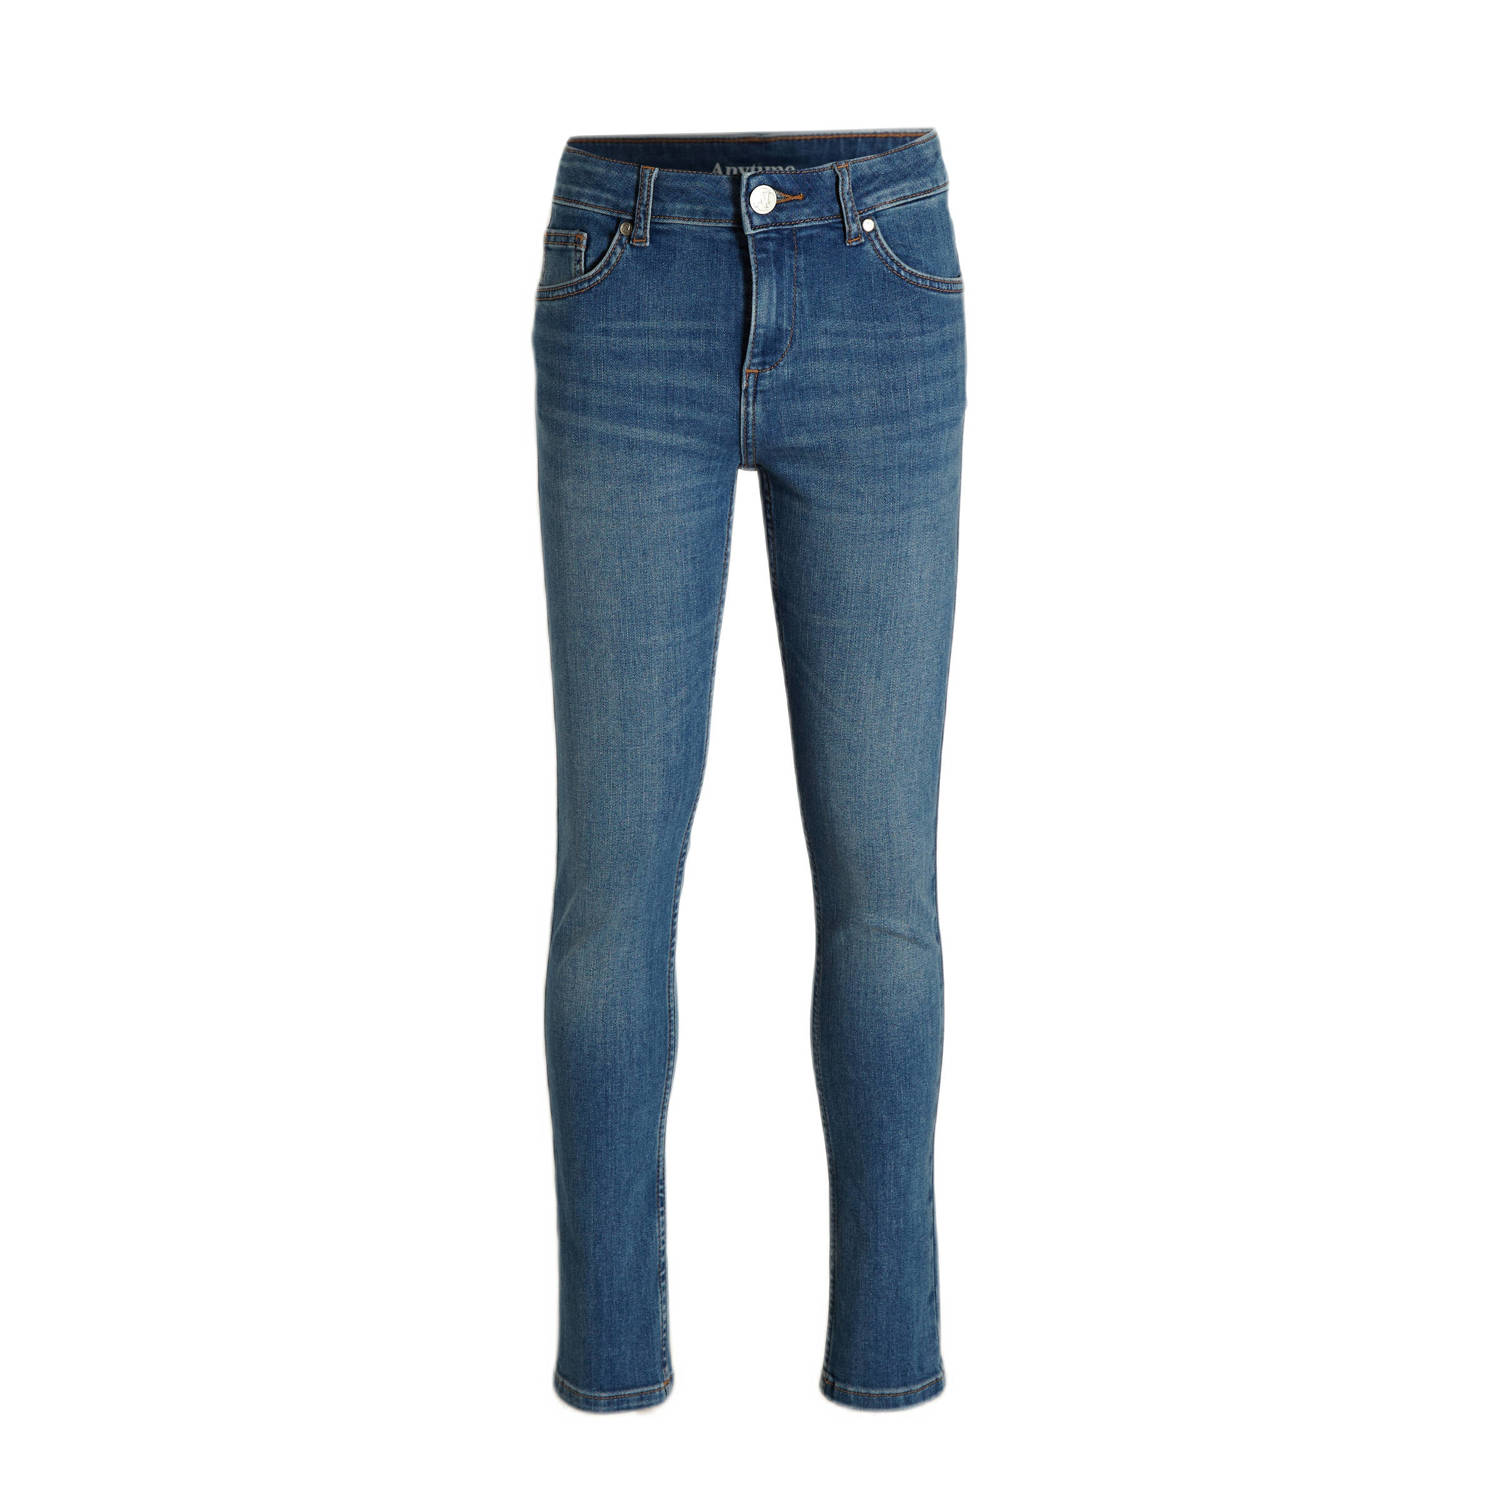 Anytime slim fit jeans blauw Jongens Denim 104 | Jeans van